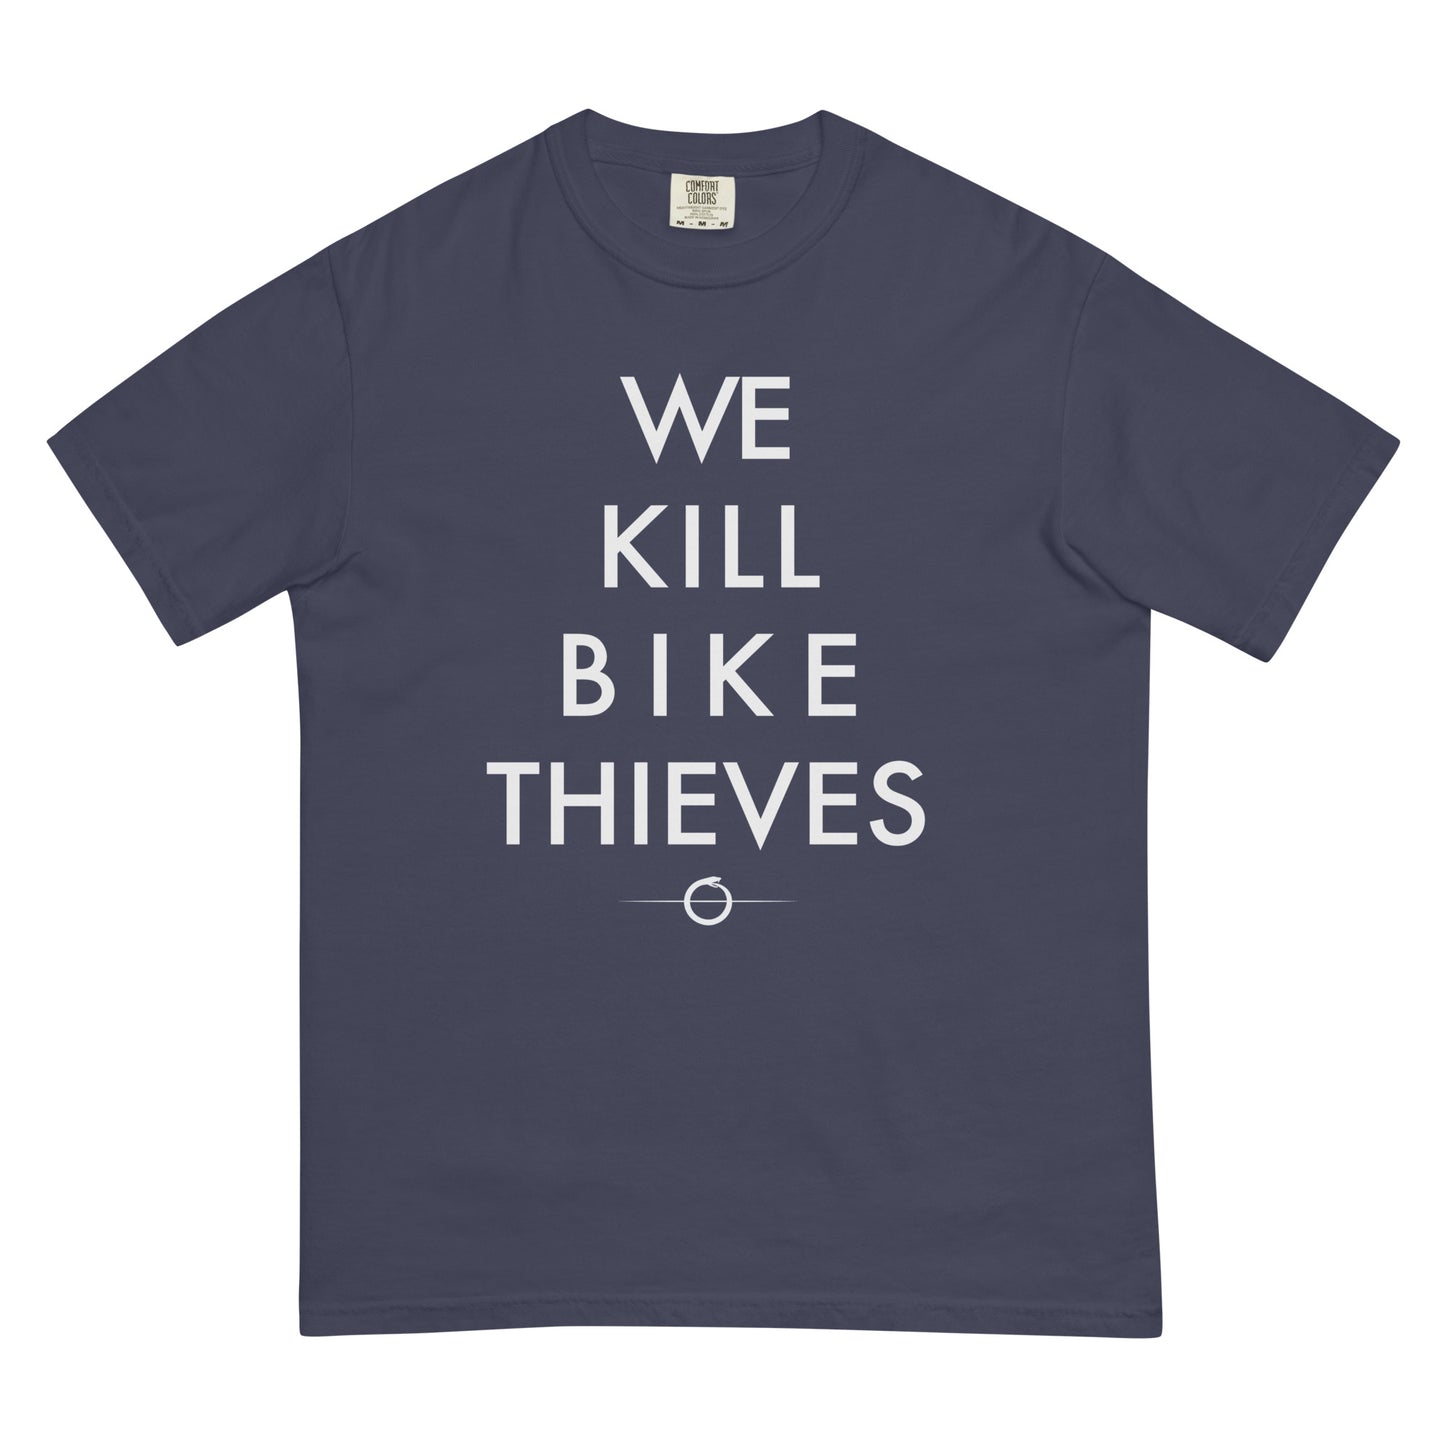 We Kill Bike Thieves Tee